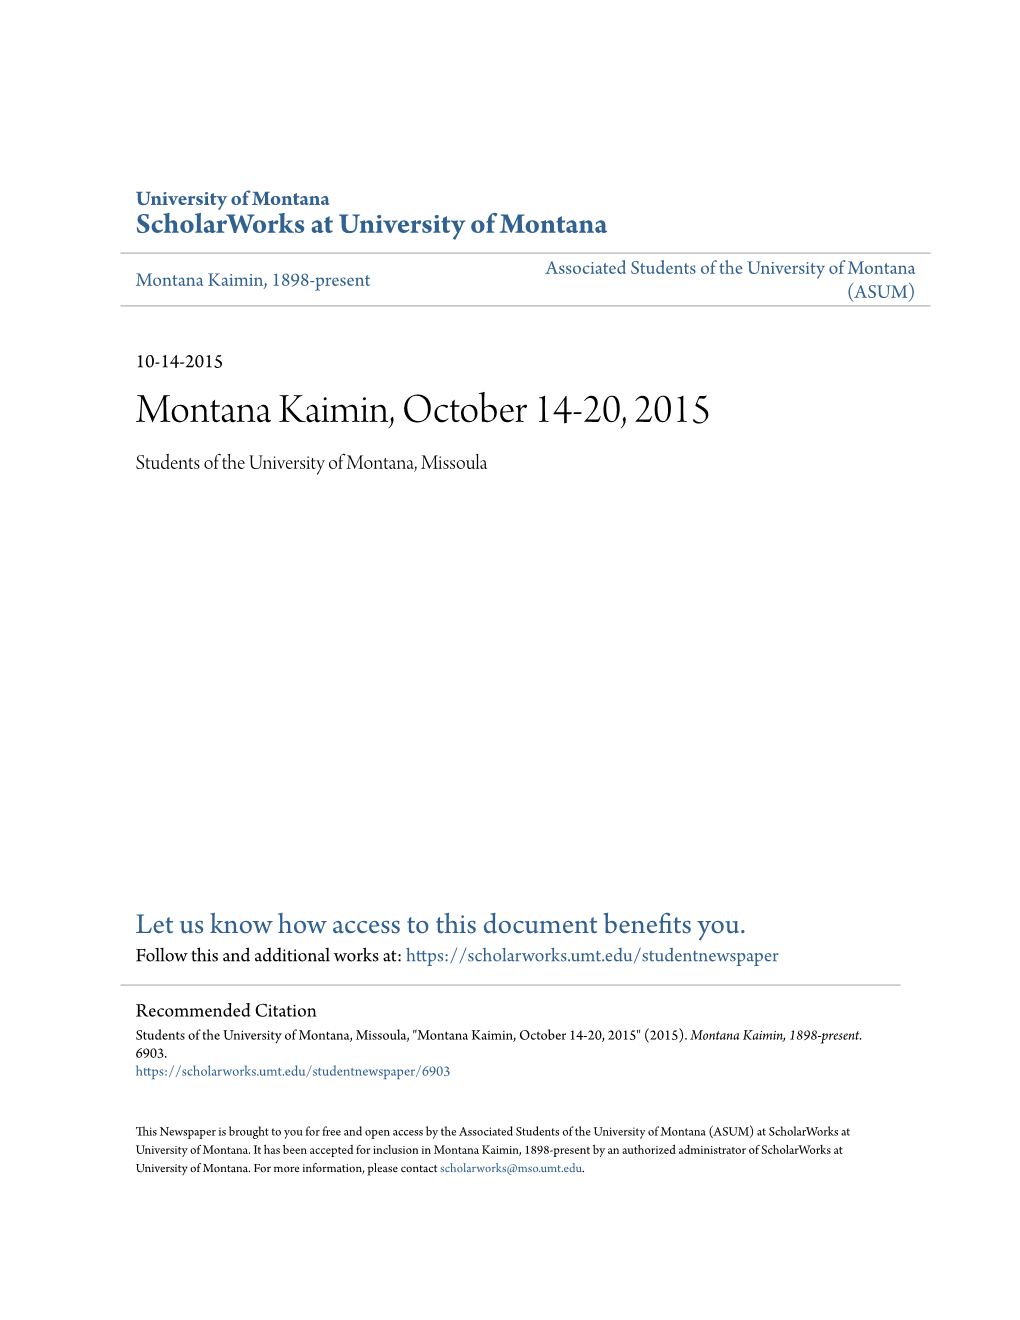 Montana Kaimin, October 14-20, 2015 Students of the University of Montana, Missoula